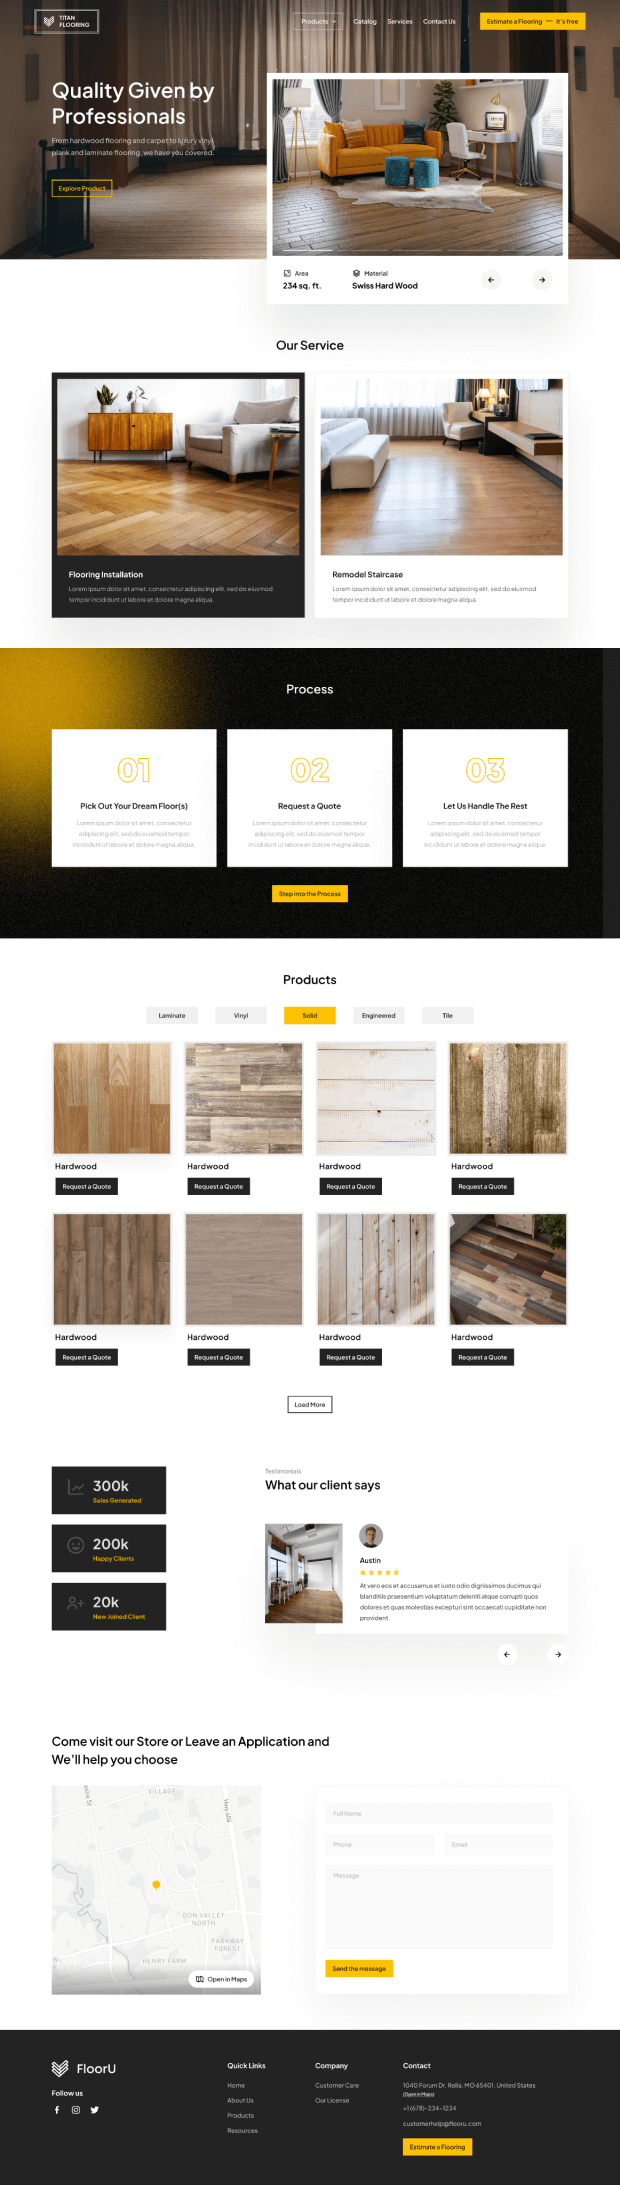 Strong Representation - Titan Flooring Website by Brand Vision Marketing.